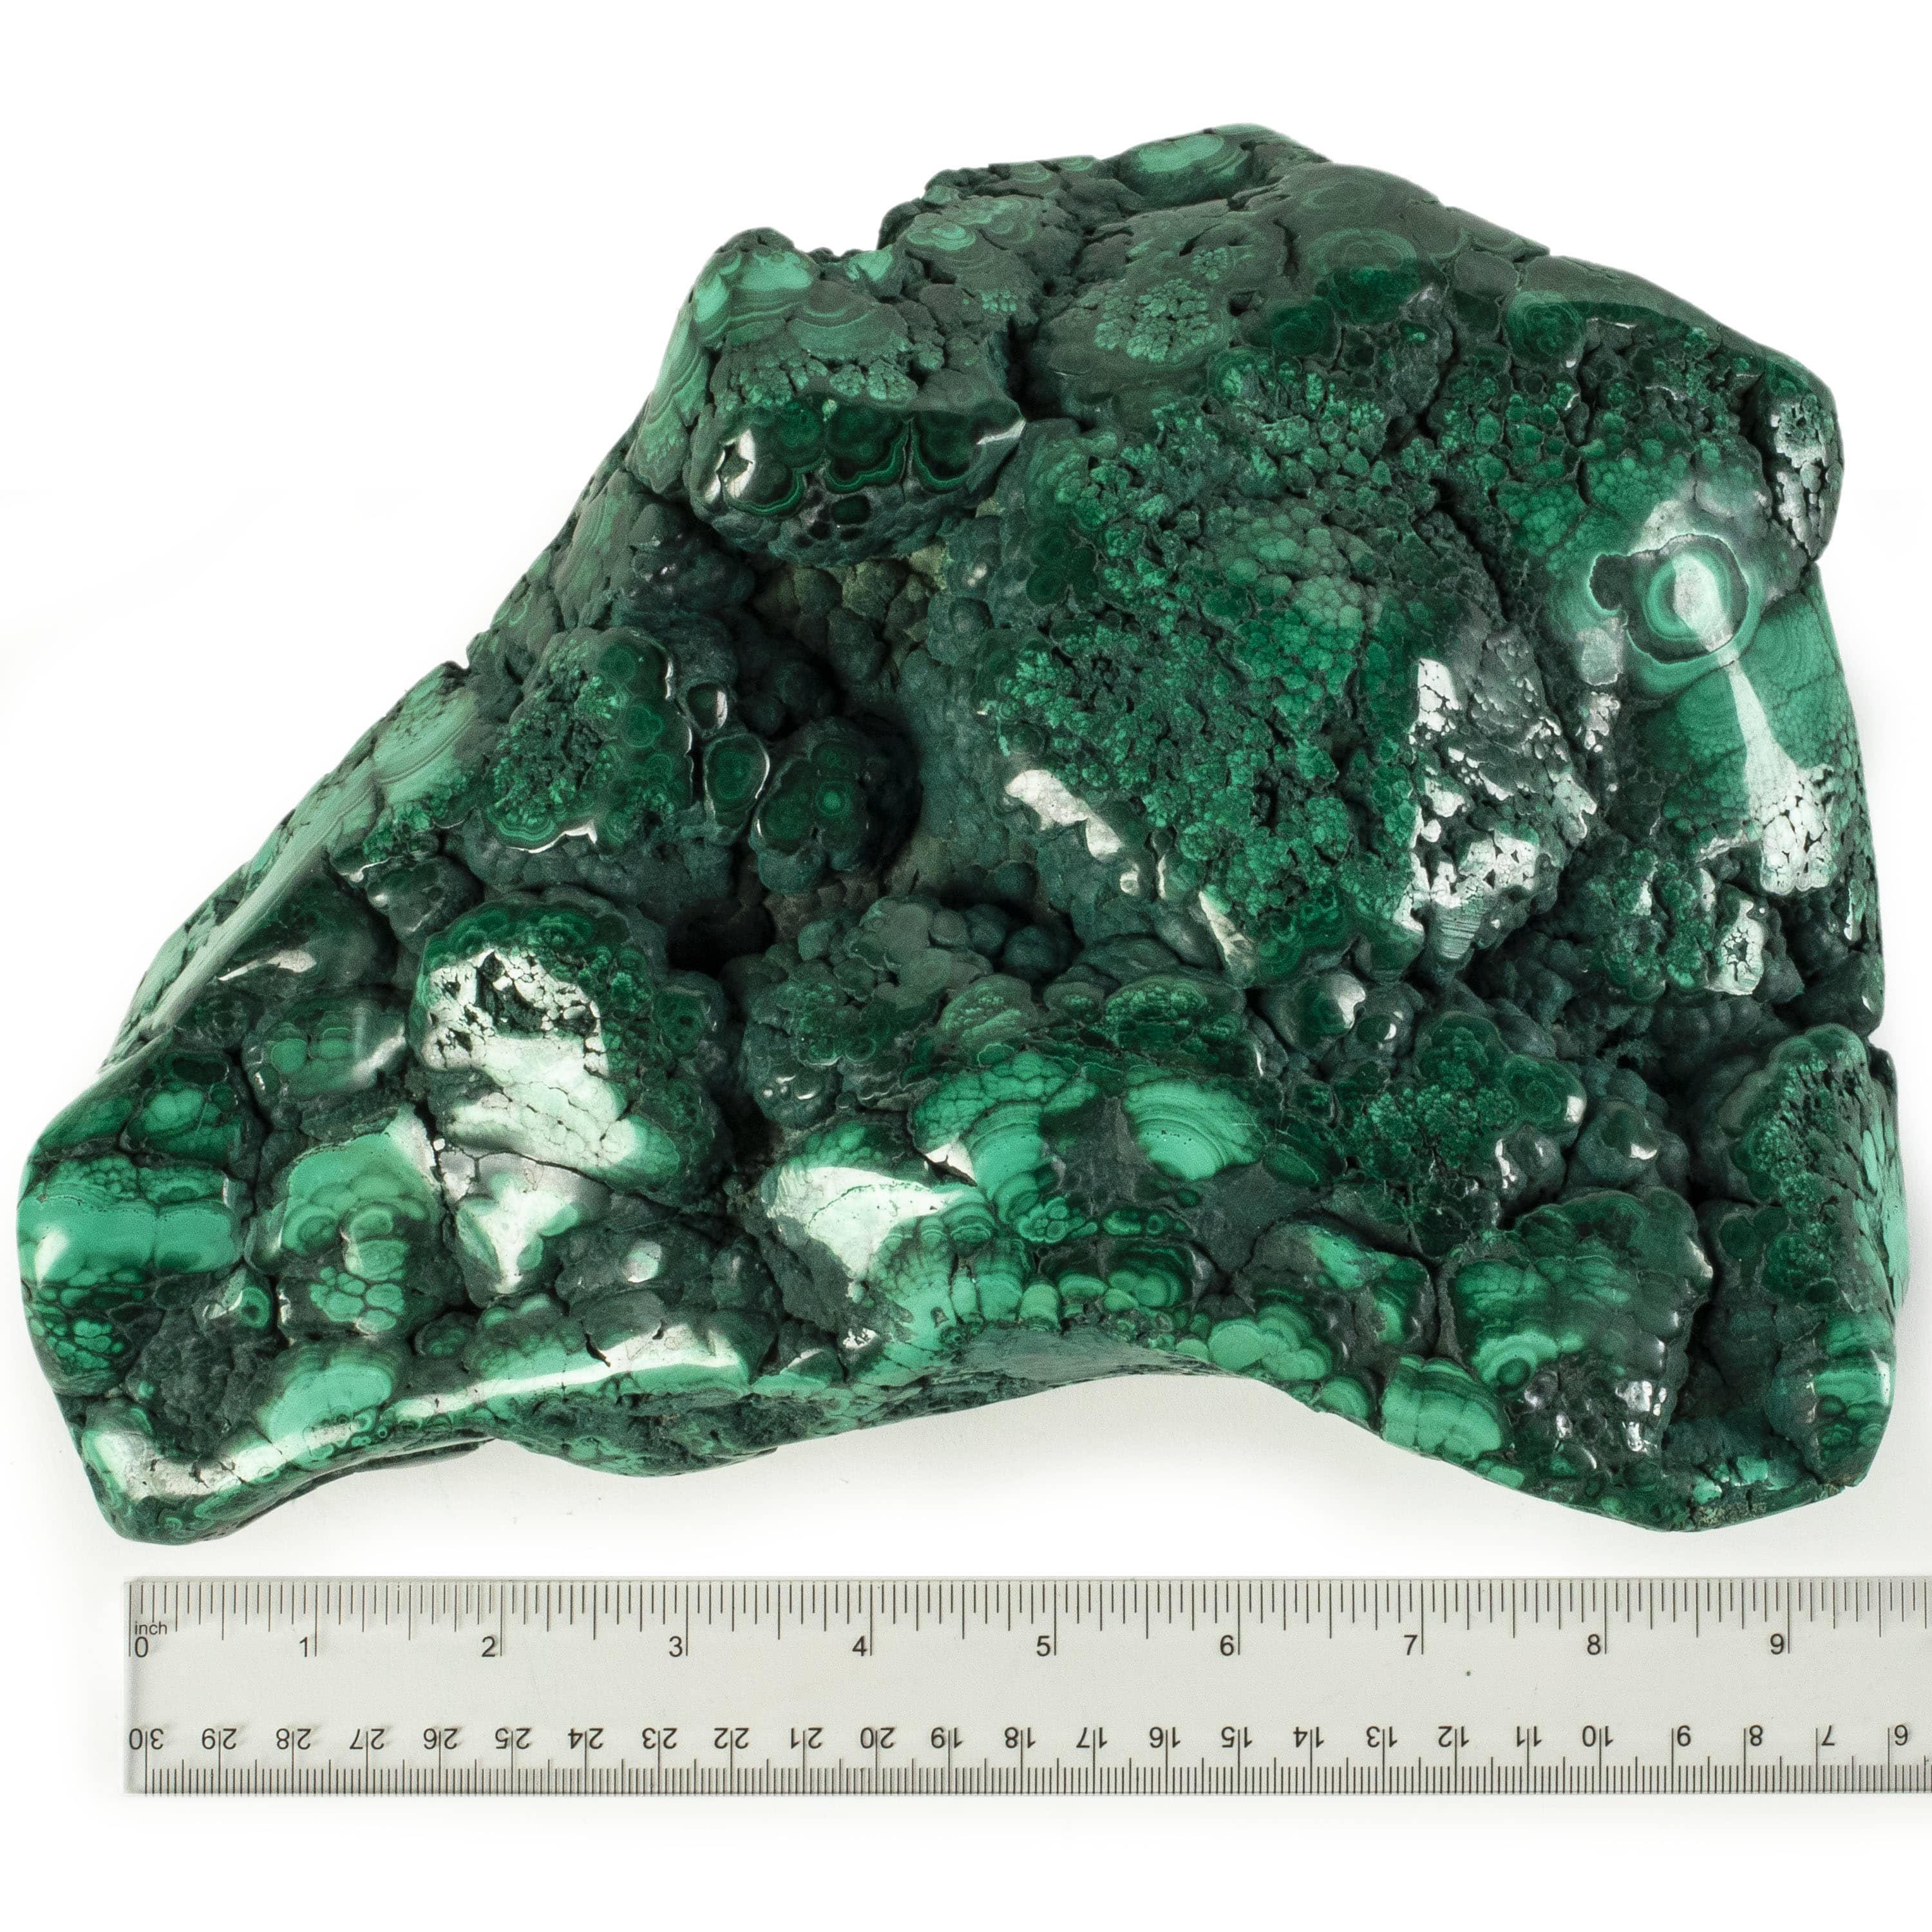 Kalifano Malachite Rare Natural Green Malachite Polished Freeform Specimen from Congo - 5.6 kg / 12.2 lbs MA3500.001